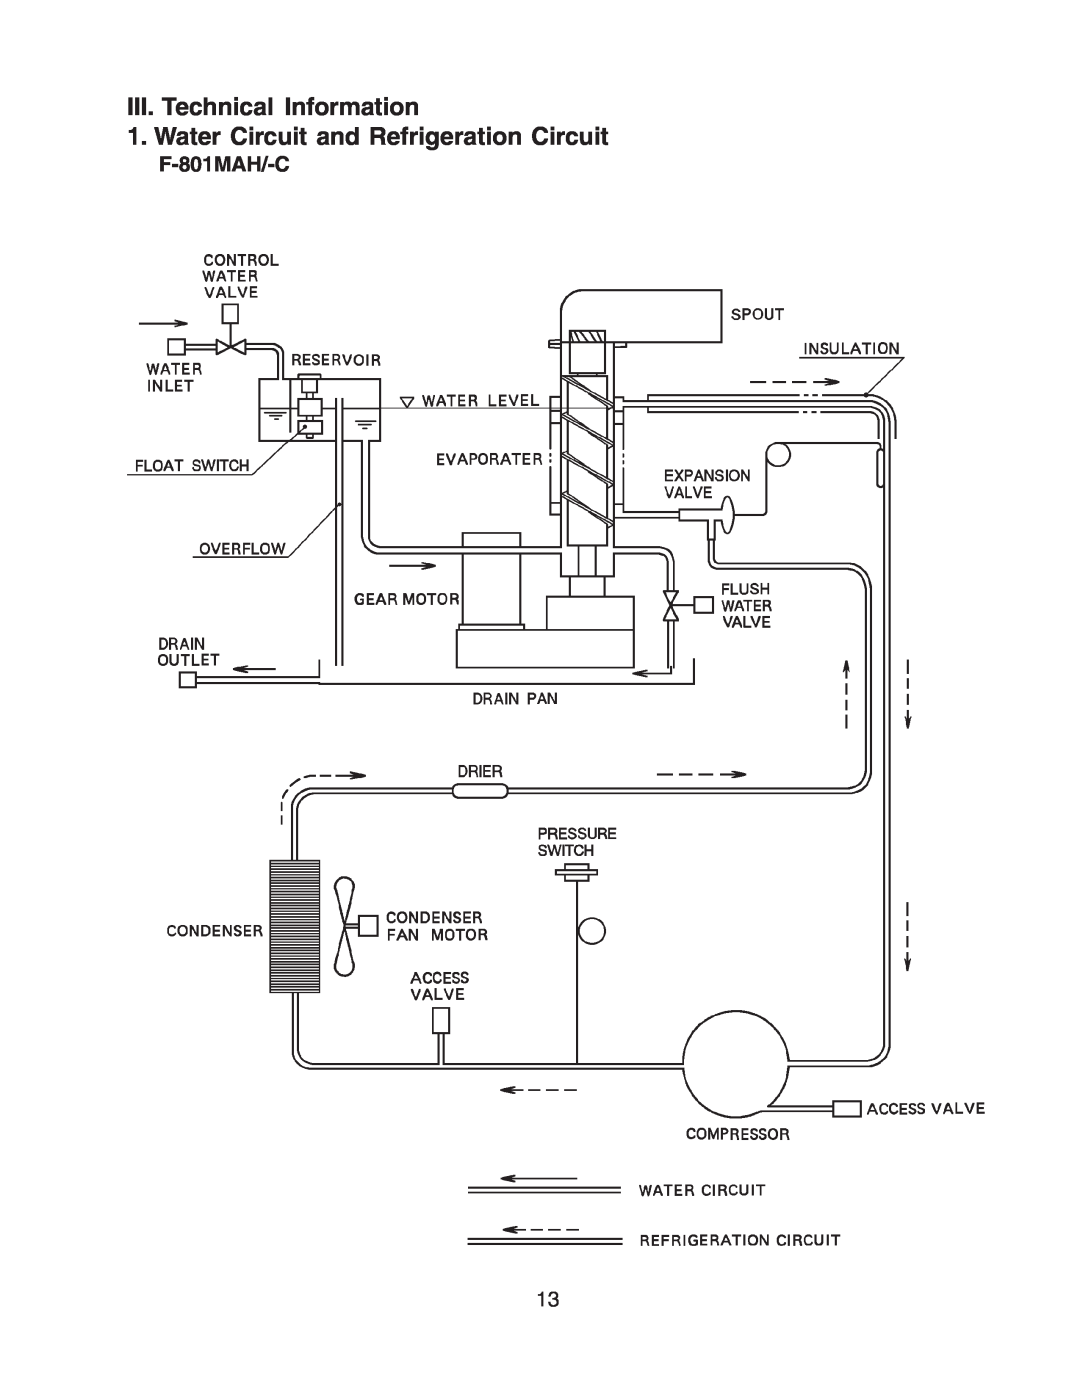 Hoshizaki F-80 I MAH (-c) service manual III. Technical Information 1. Water Circuit and Refrigeration Circuit, F-801MAH/-C 